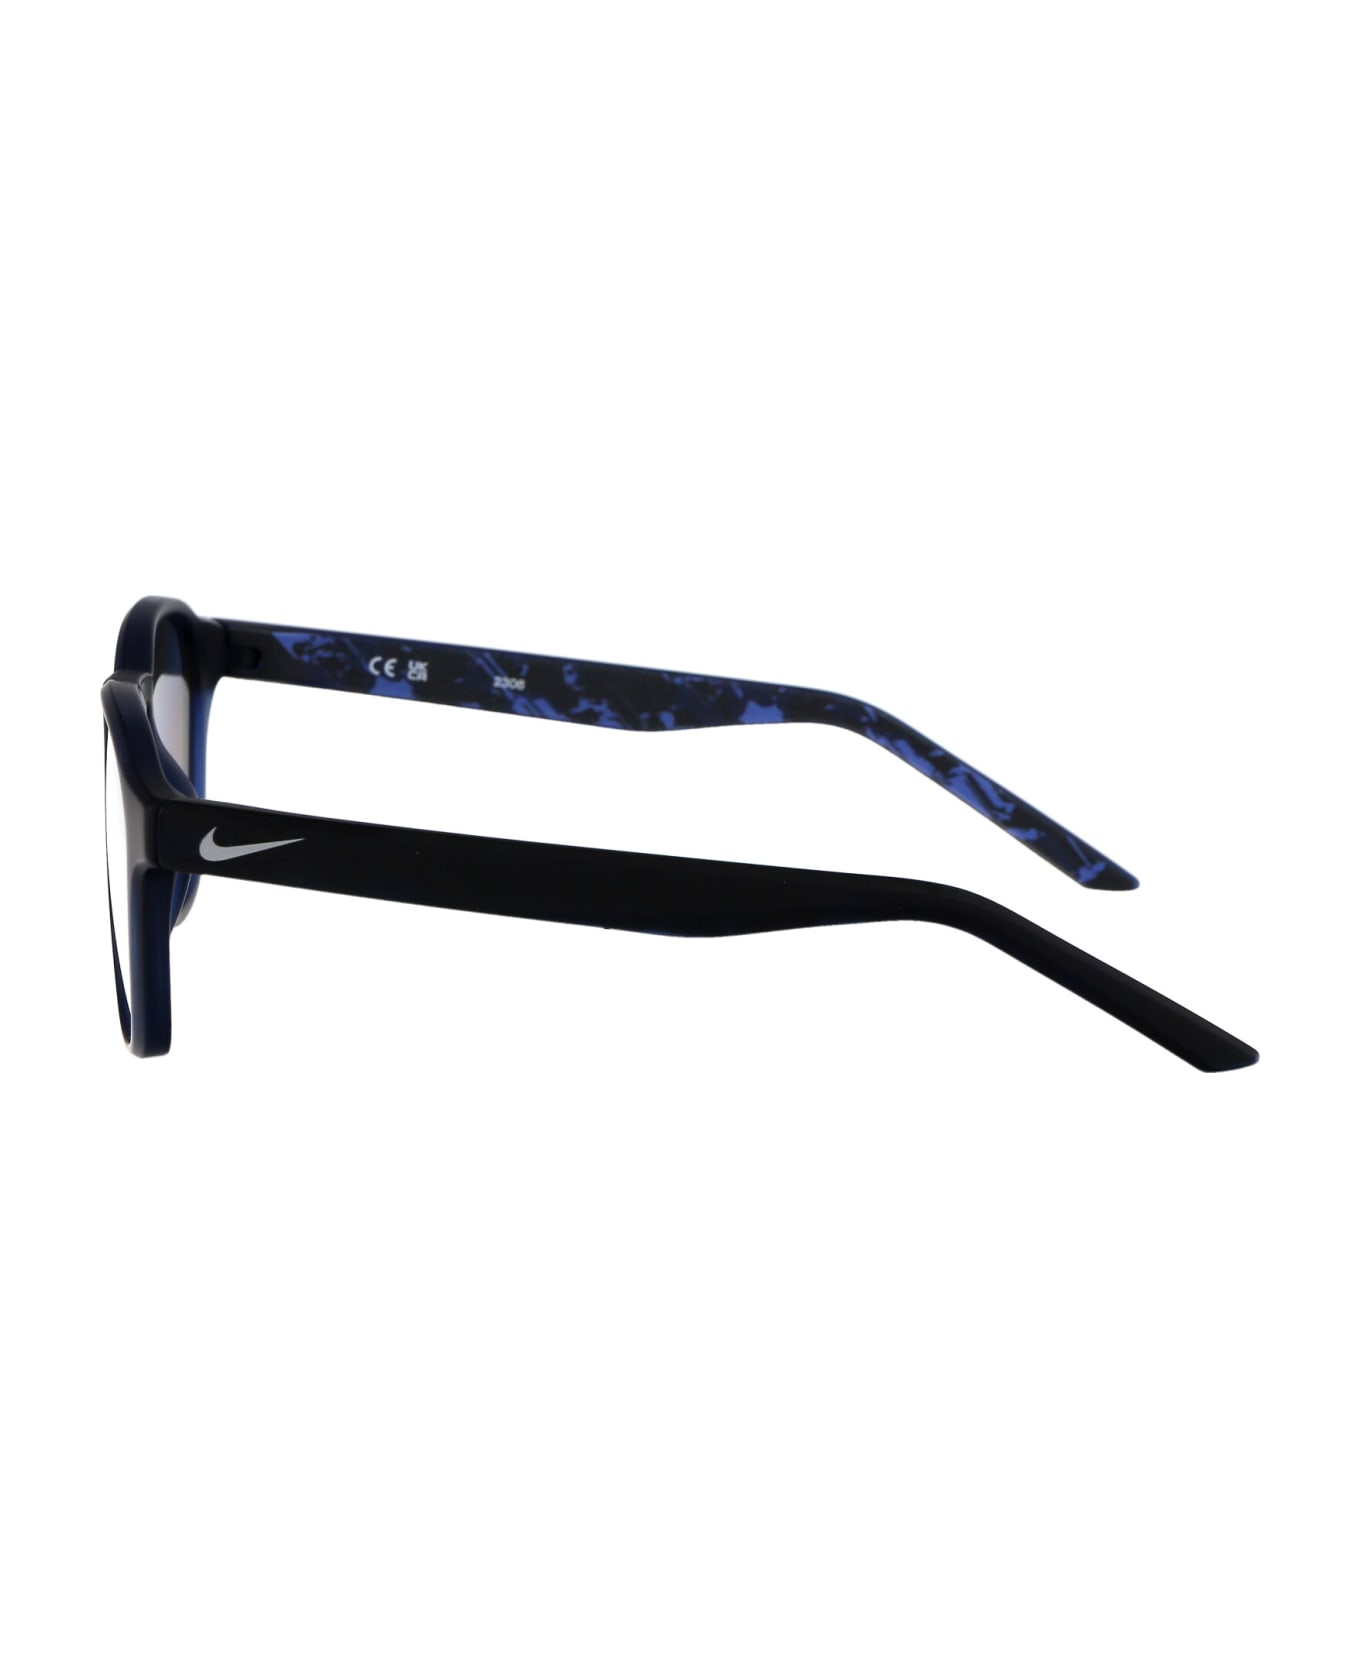 Nike Smash Sunglasses - 410 GREY W/ SILVER FLASH MATTE MIDNIGHT NAVY サングラス